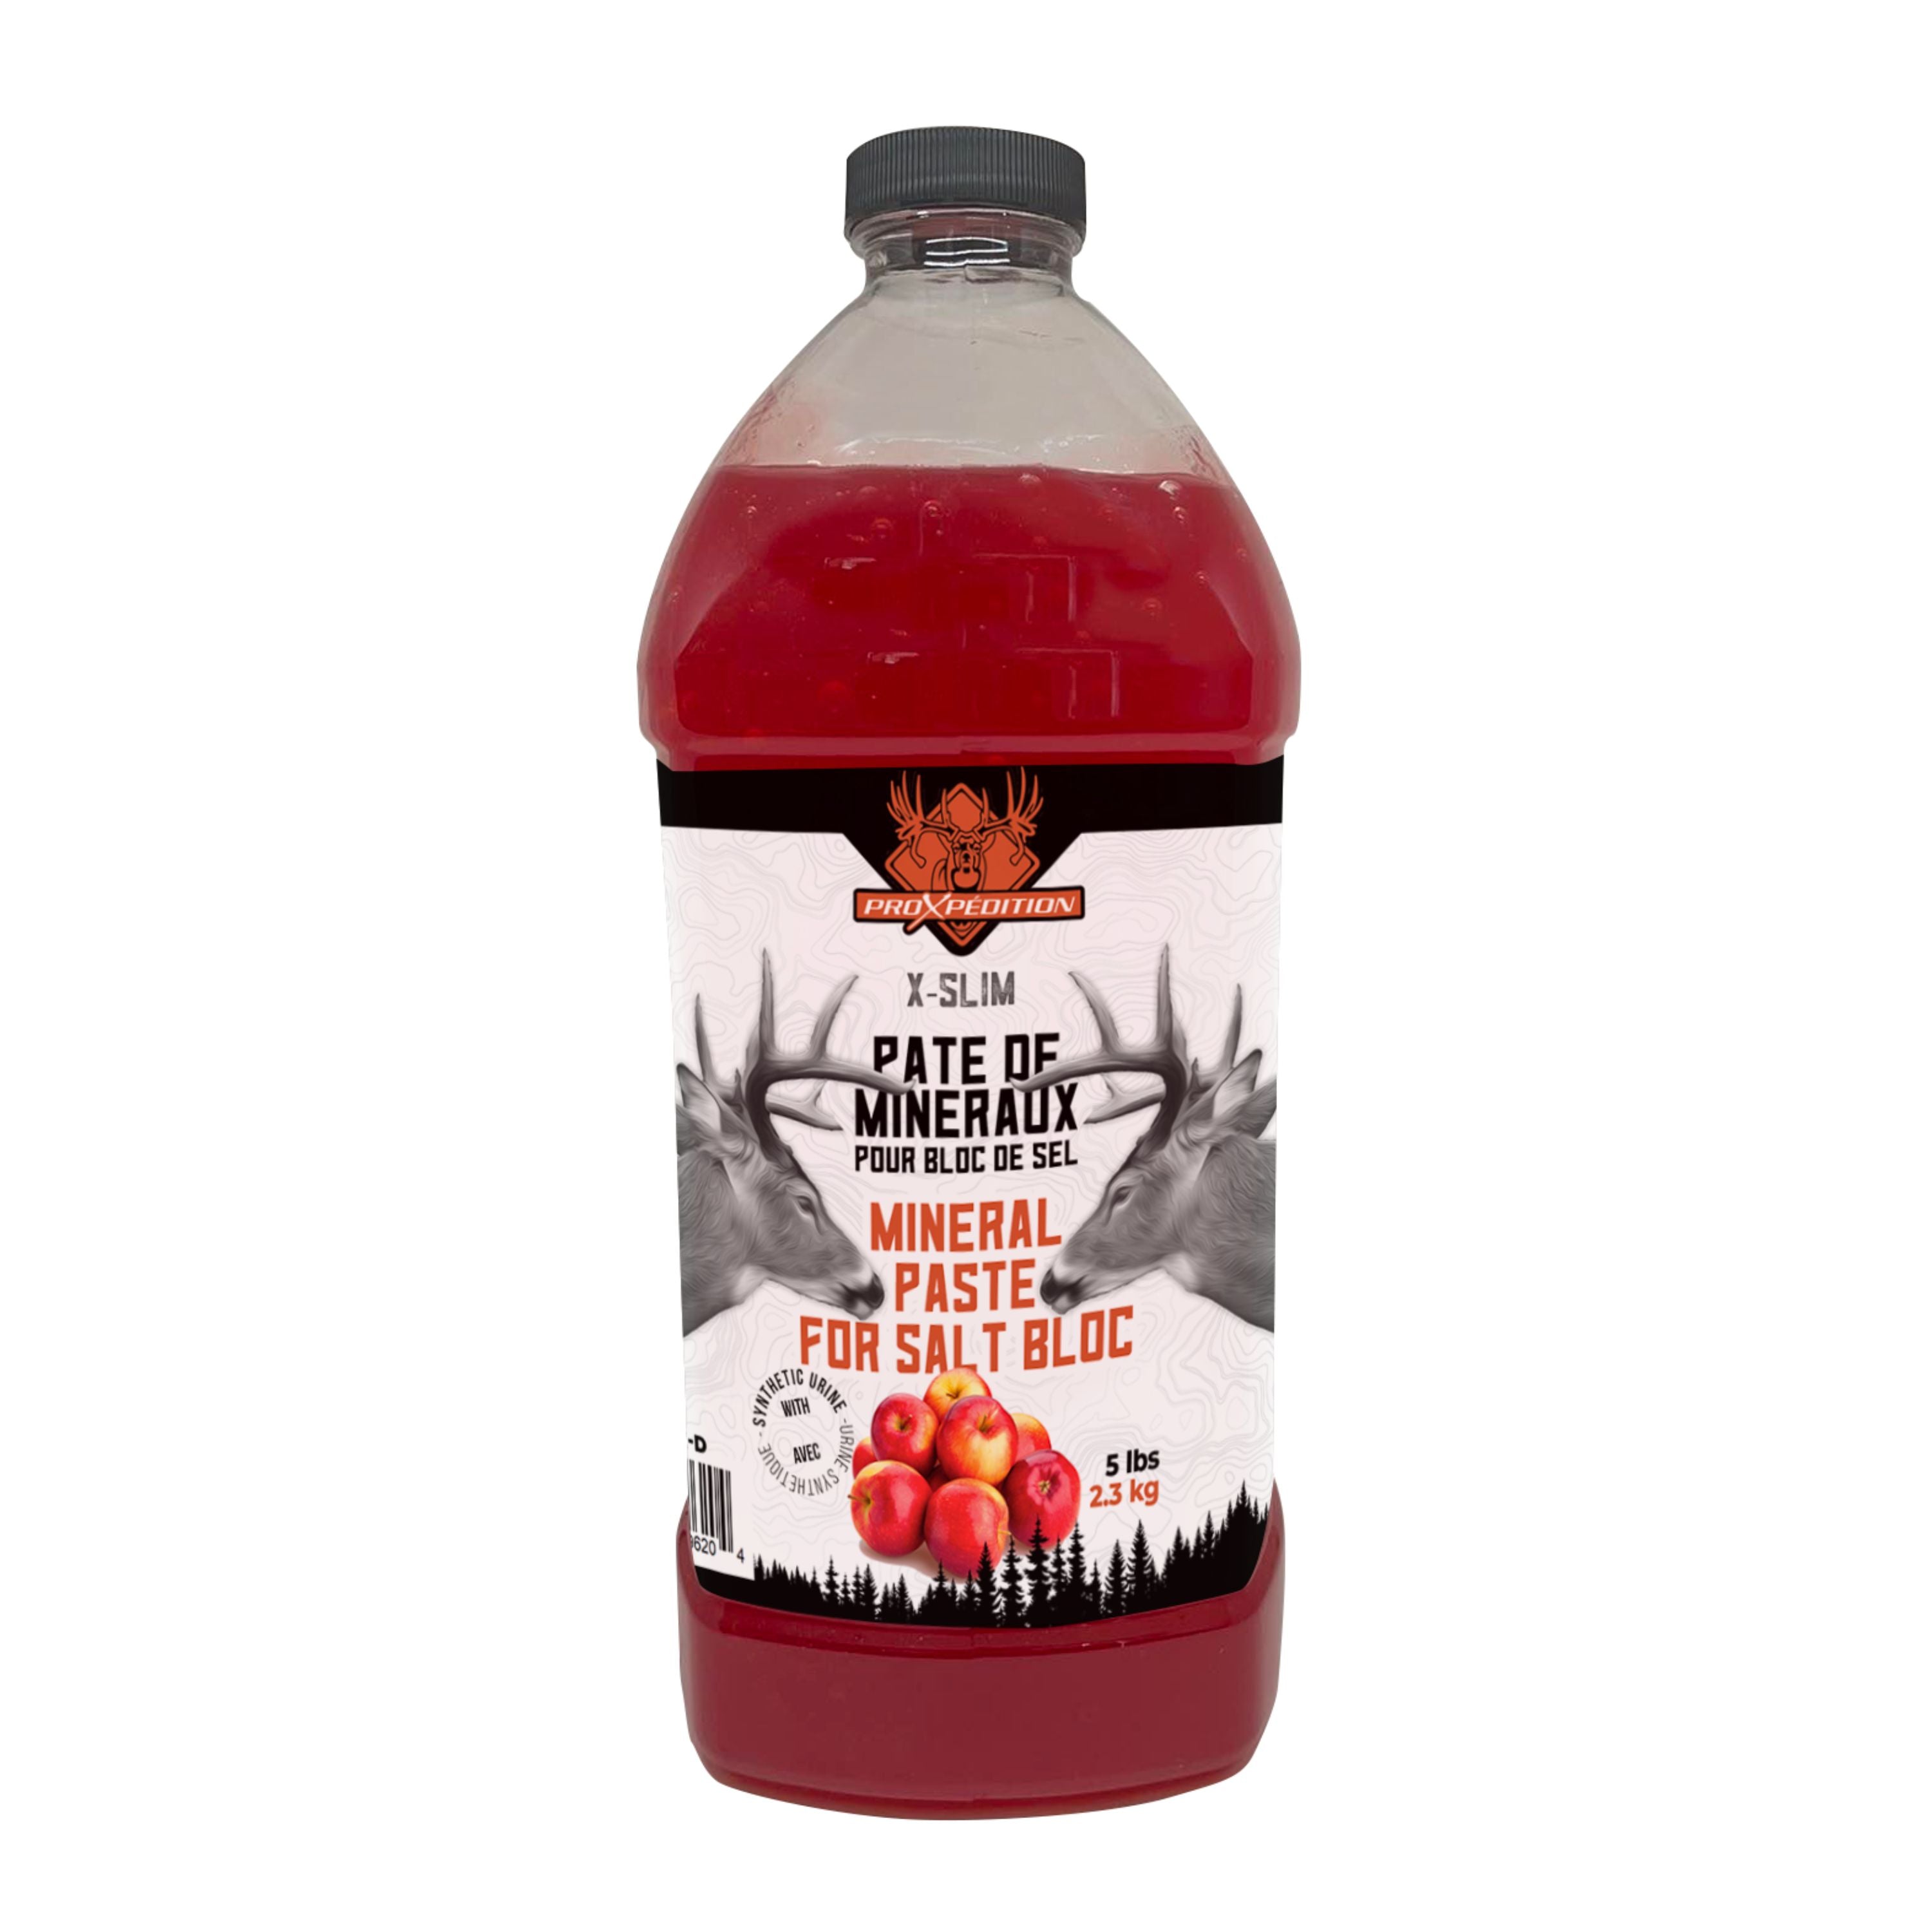 "X-Slim" Apple flavor mineral liquid paste for salt bloc - Deer